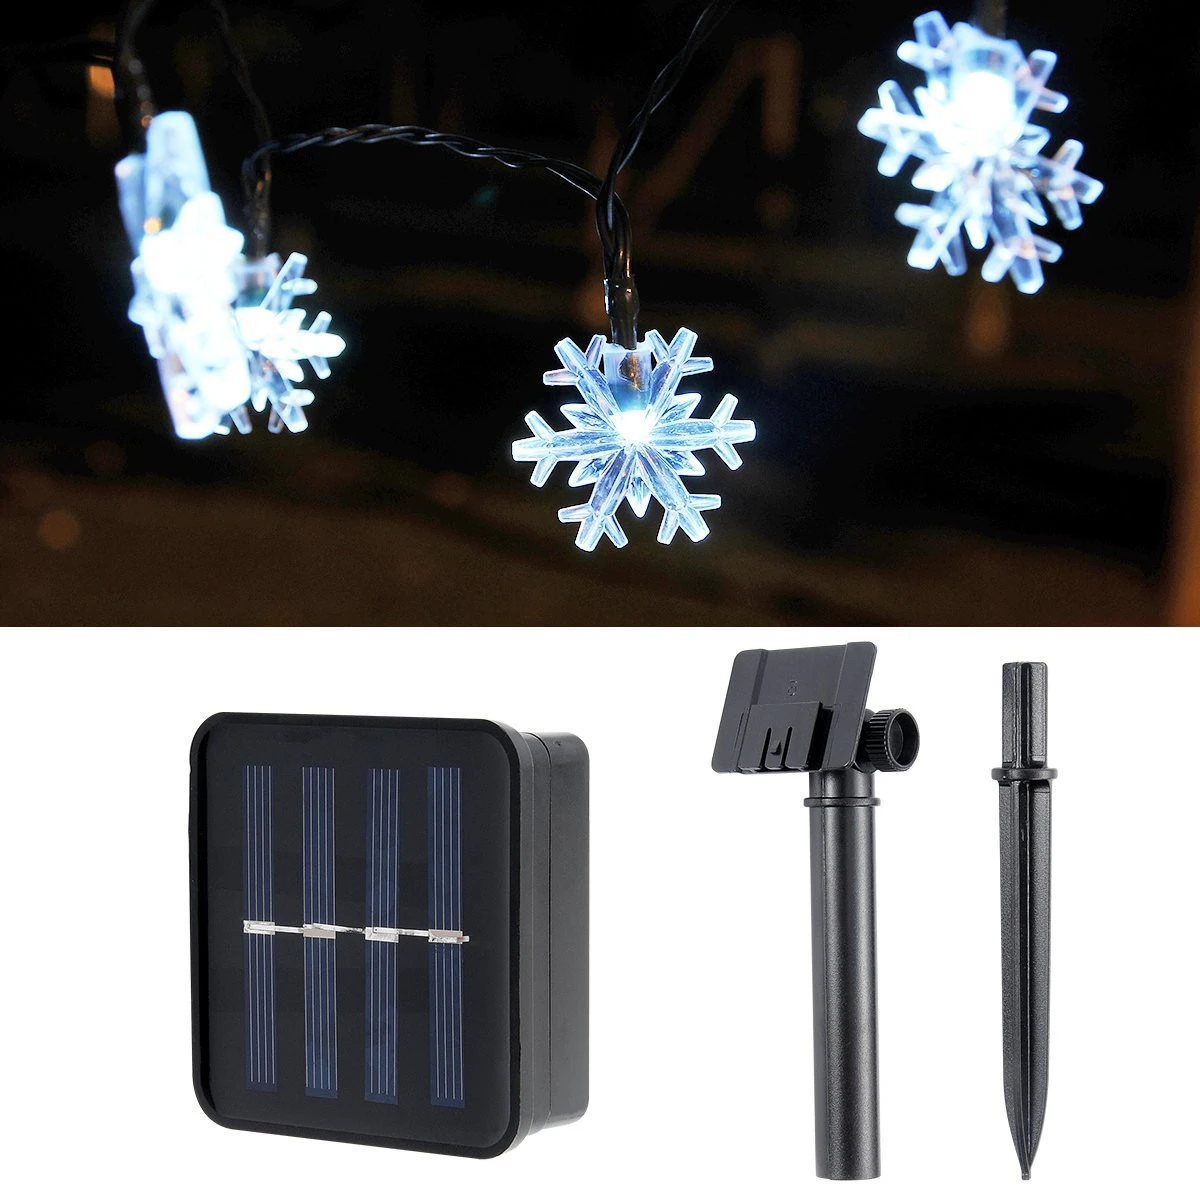 Waterproof Solar String Lights Led Snowflake Christmas Outdoor Garden Decoration Light